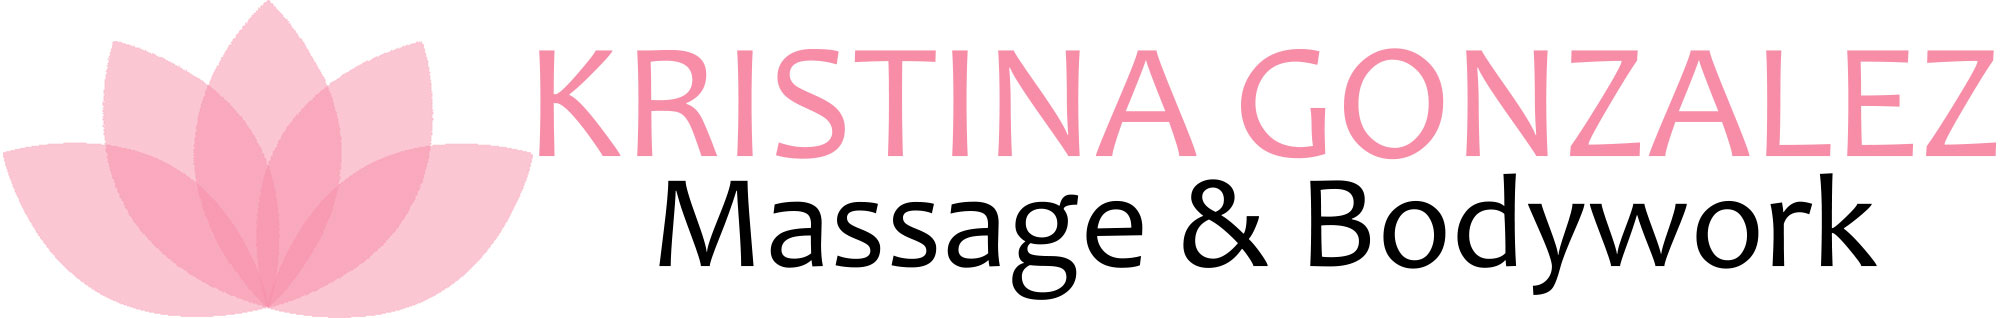 Kristina Gonzalez Massage & Bodywork color logo